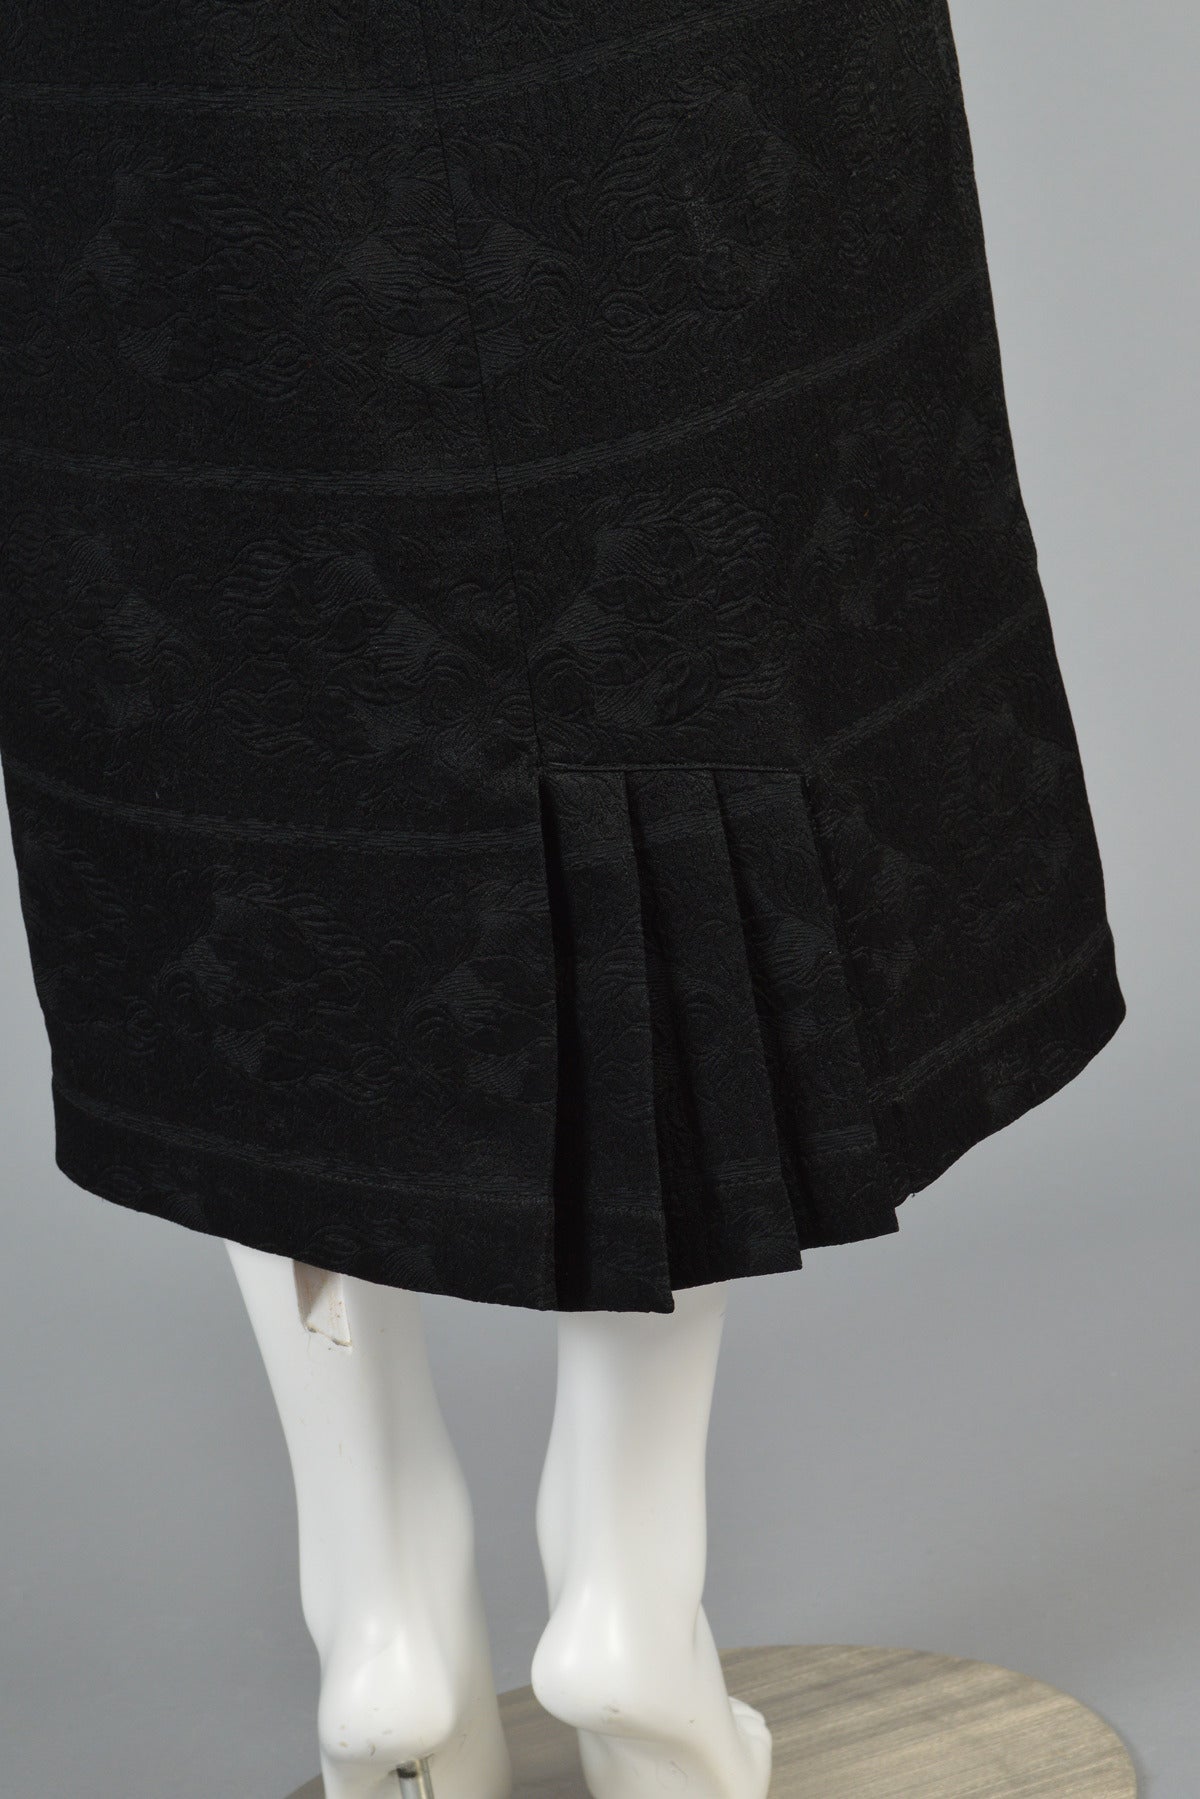 1980s Matsuda Ultra High Waisted Button Back Skirt For Sale 4